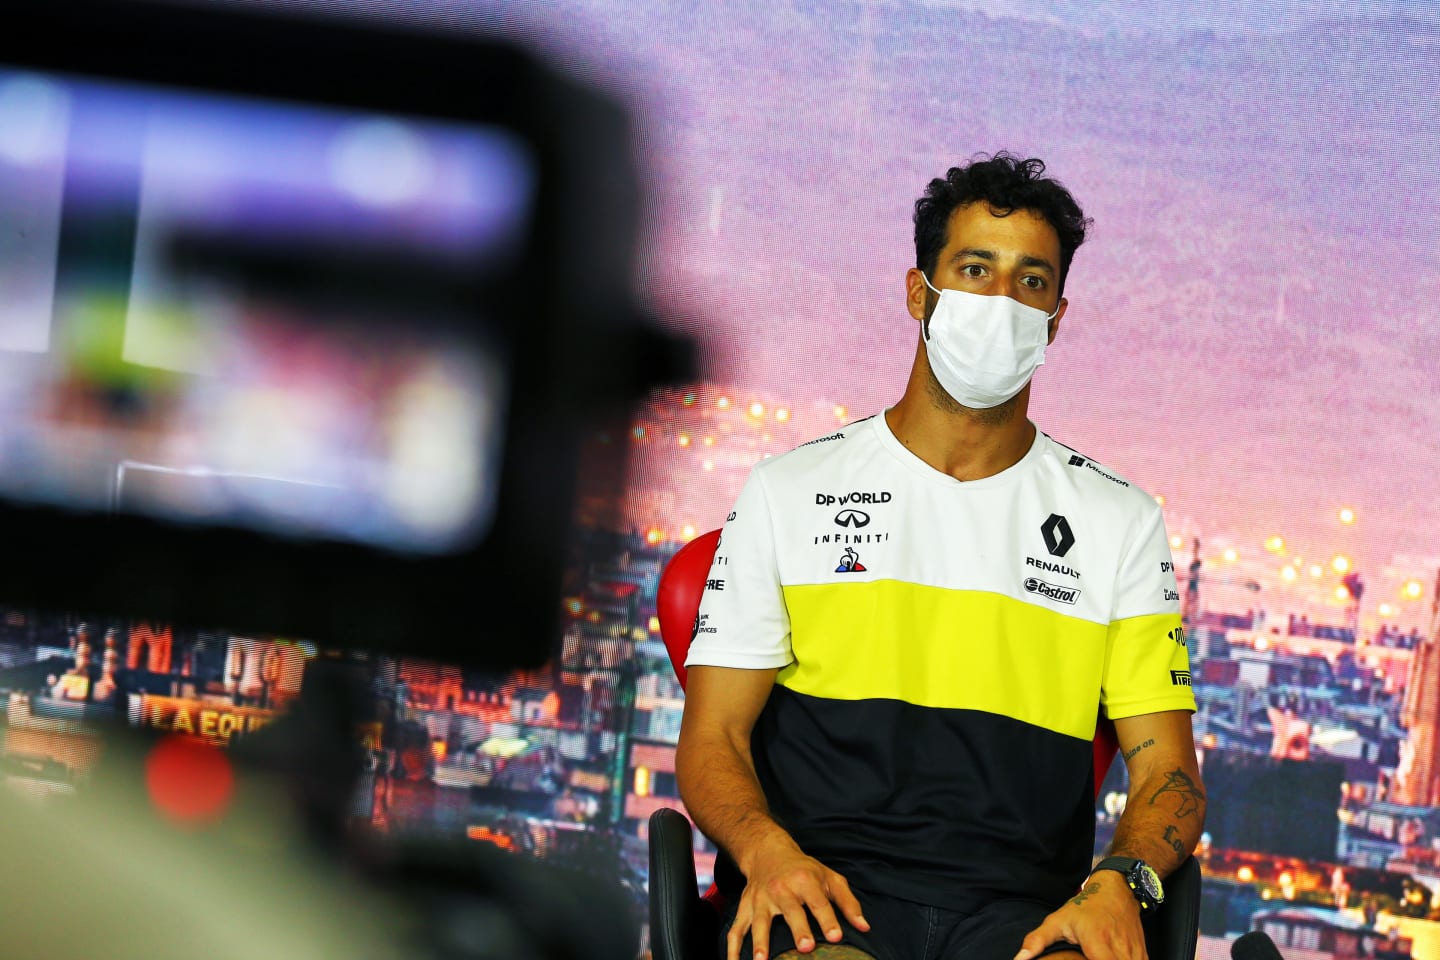 BARCELONA, SPAIN - AUGUST 13: Daniel Ricciardo of Australia and Renault Sport F1 talks in the